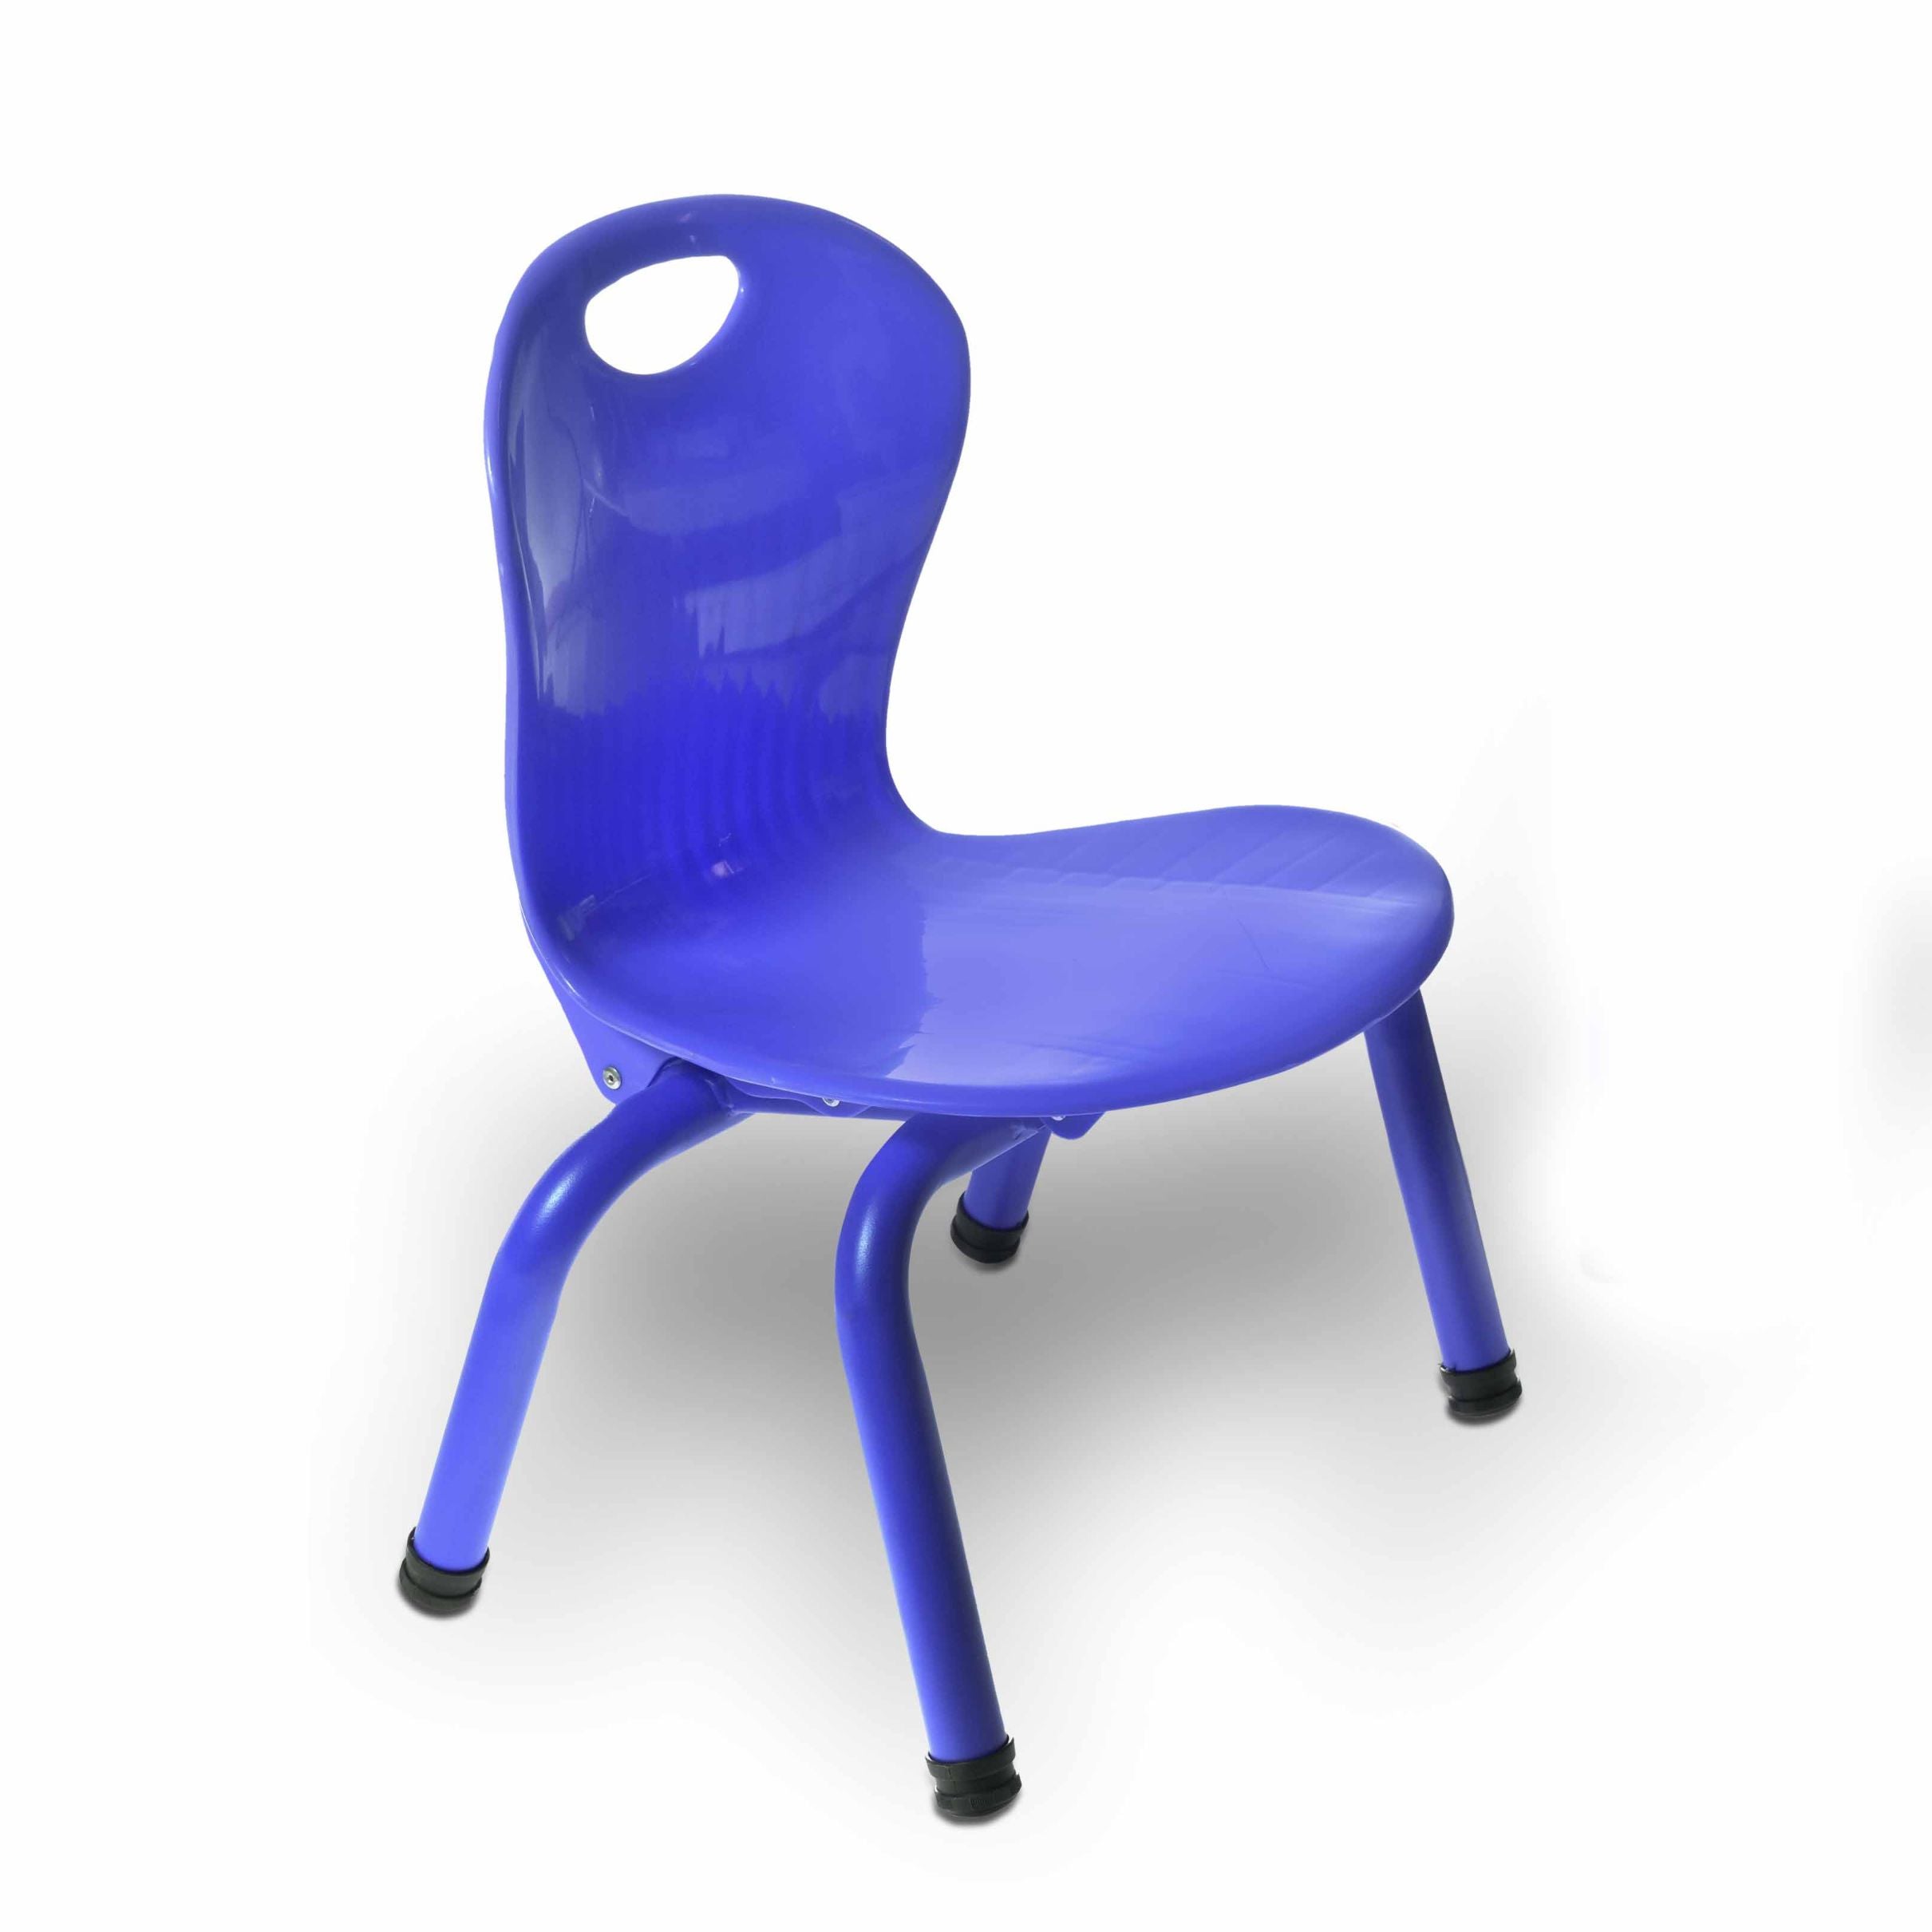 Kidicare - Stackable Tubular Chairs